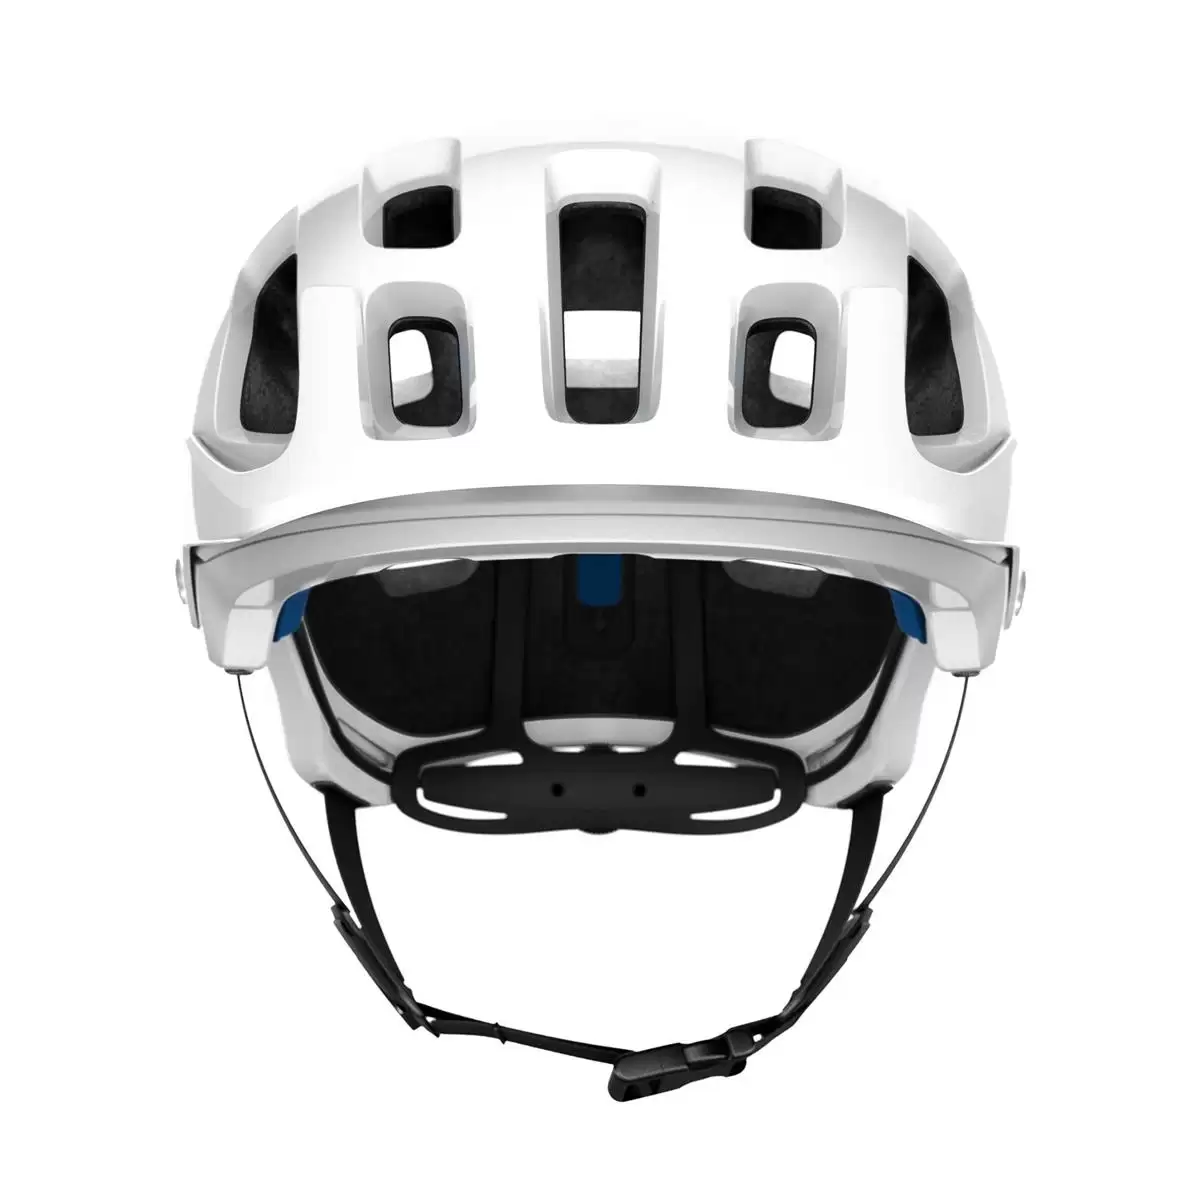 Enduro helmet Tectal Race Spin white size XS-S (51-54cm) #1